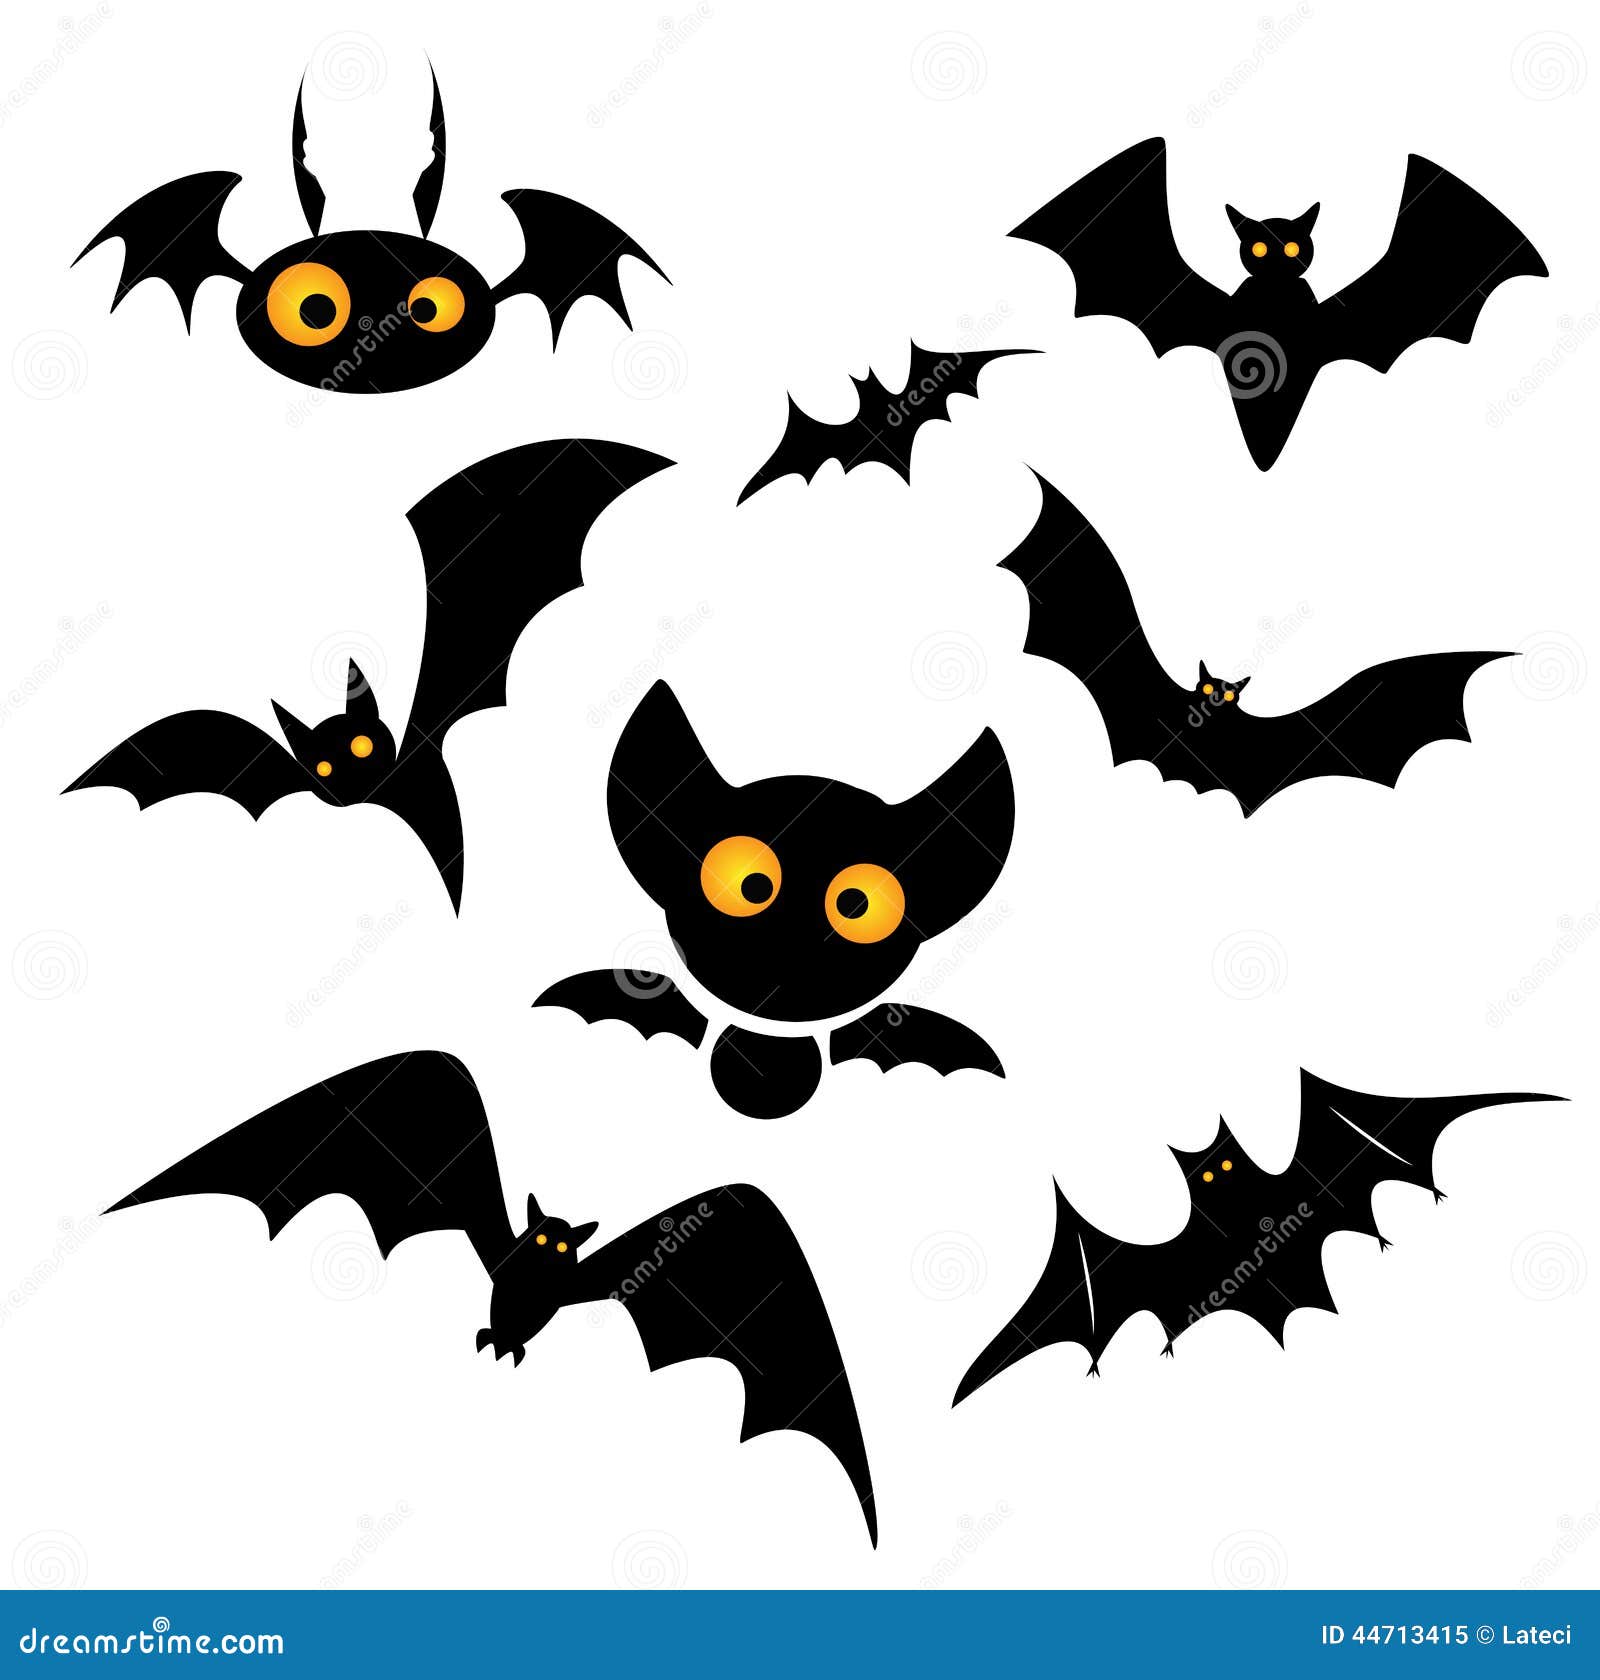 Halloween Bat Clip Art Illustration Stock Vector - Image ...